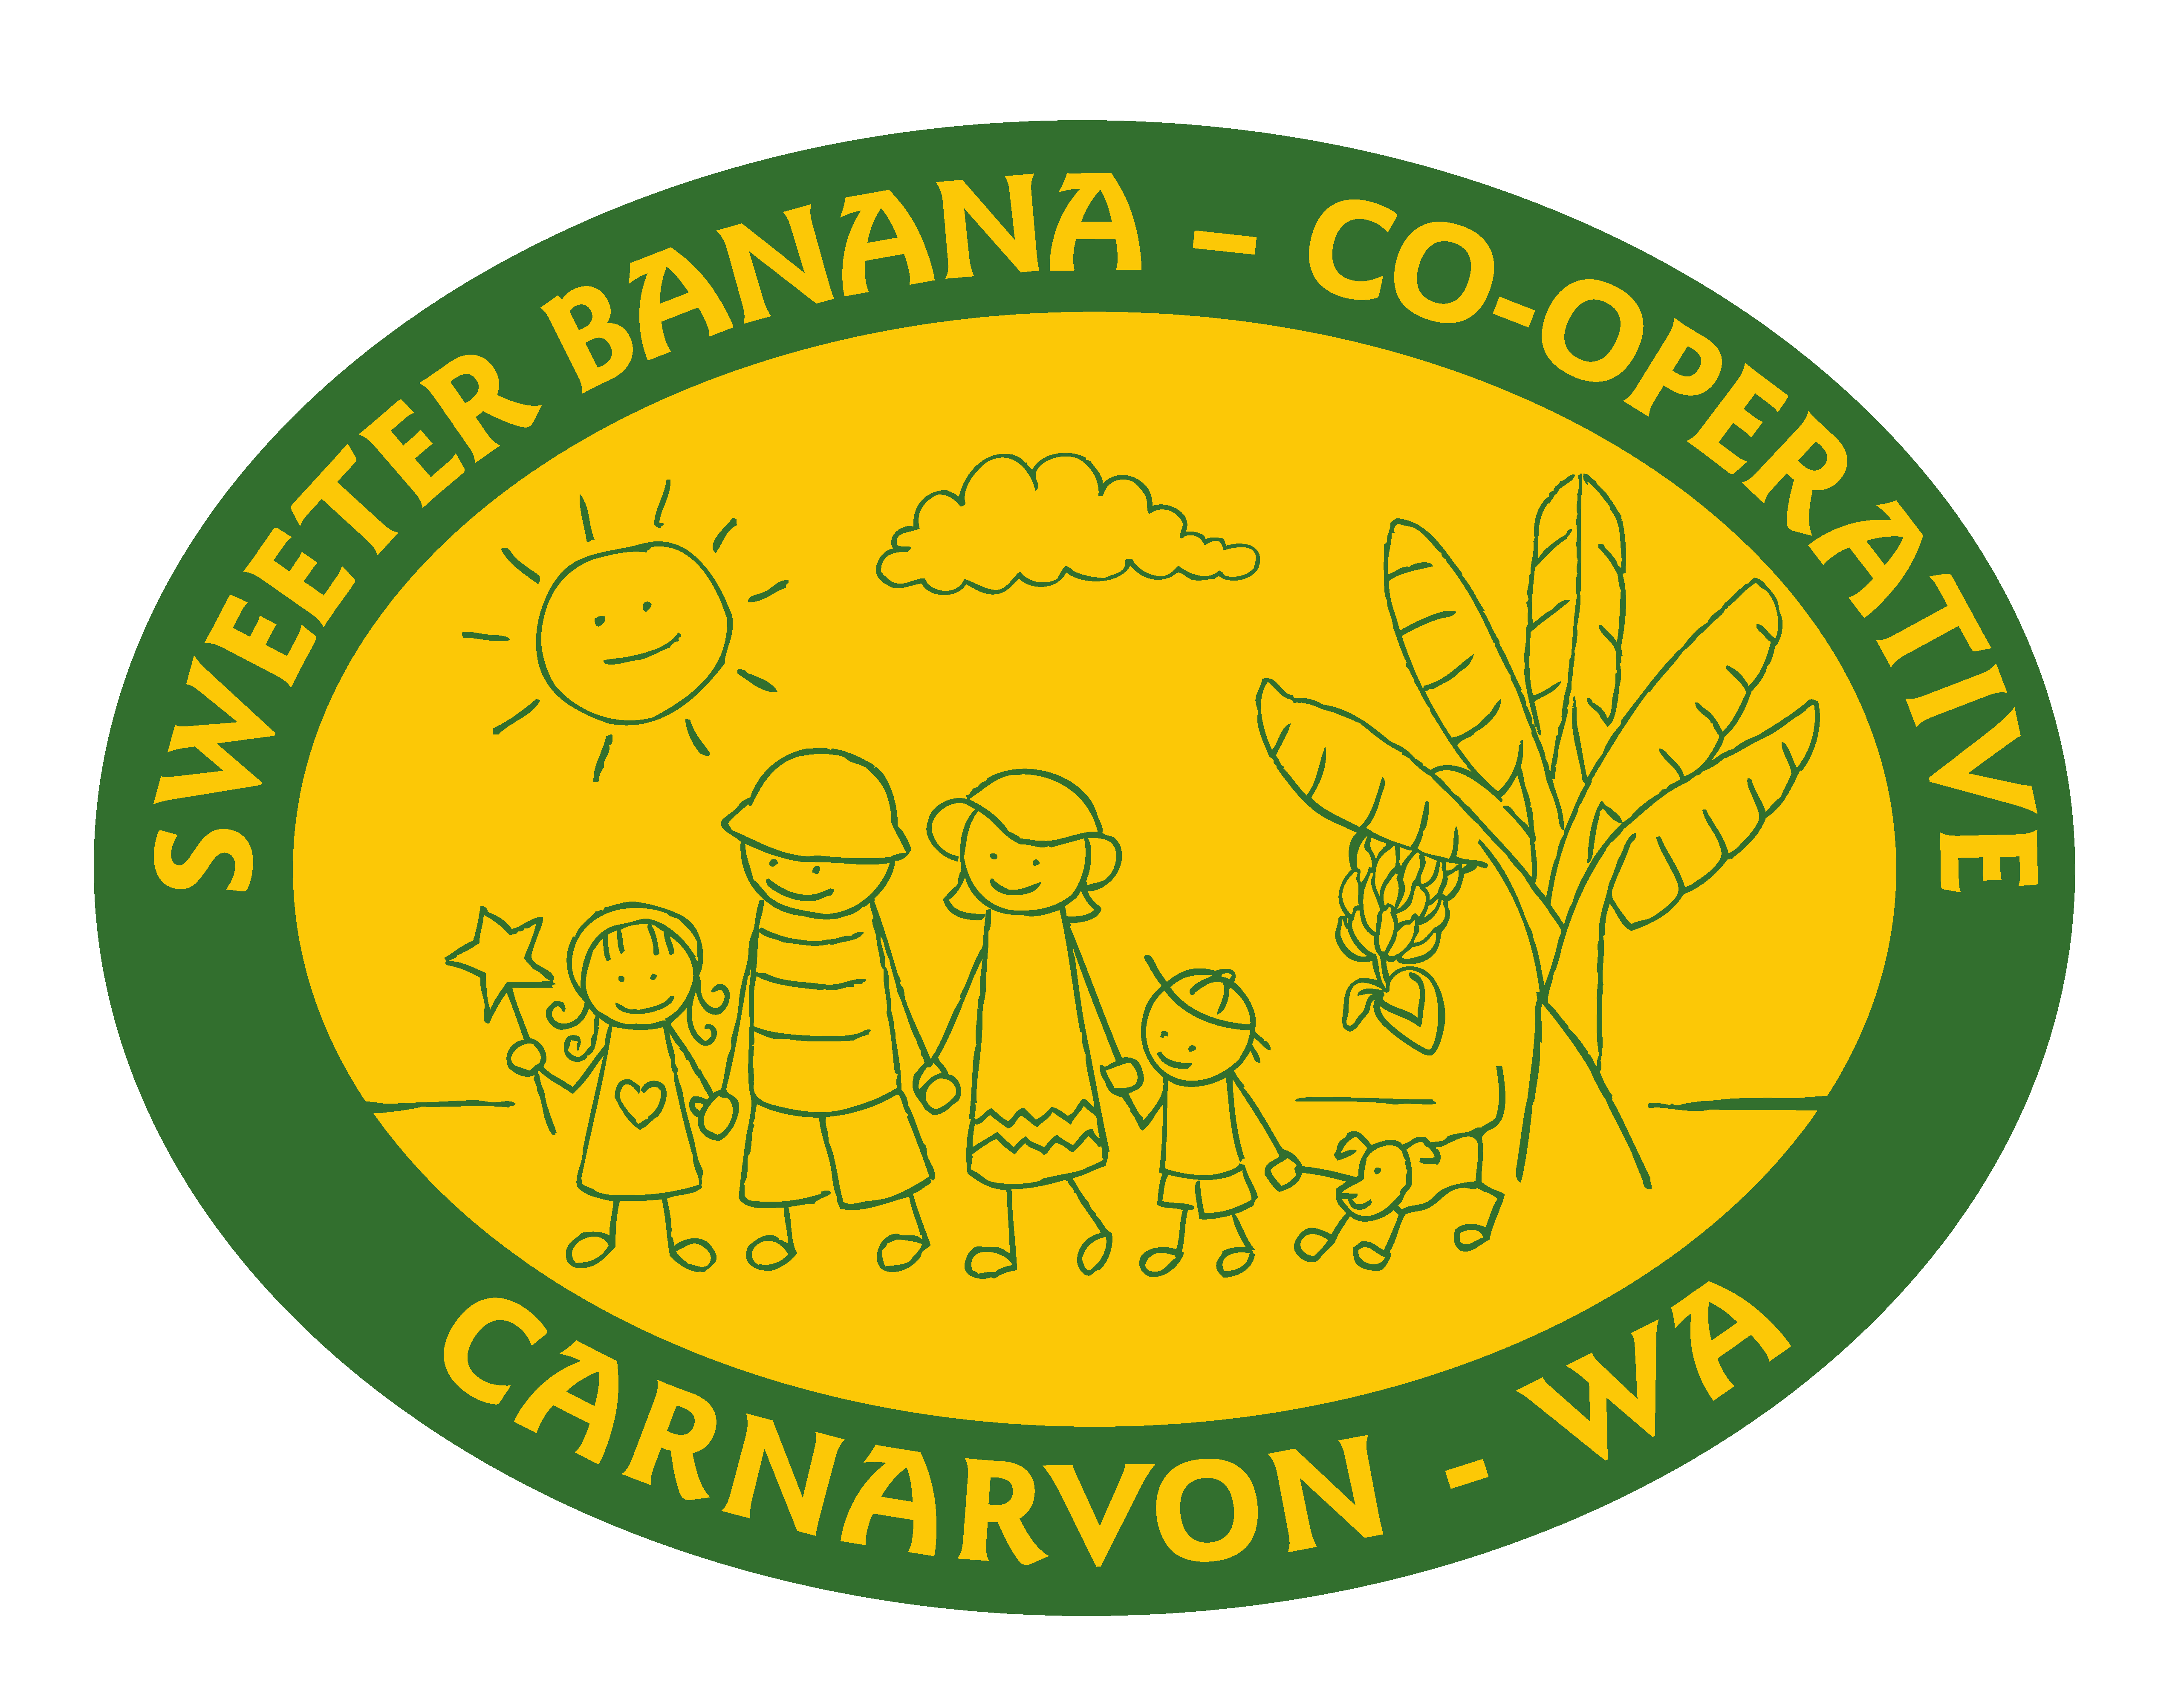 Sweeter Banana Co-operative